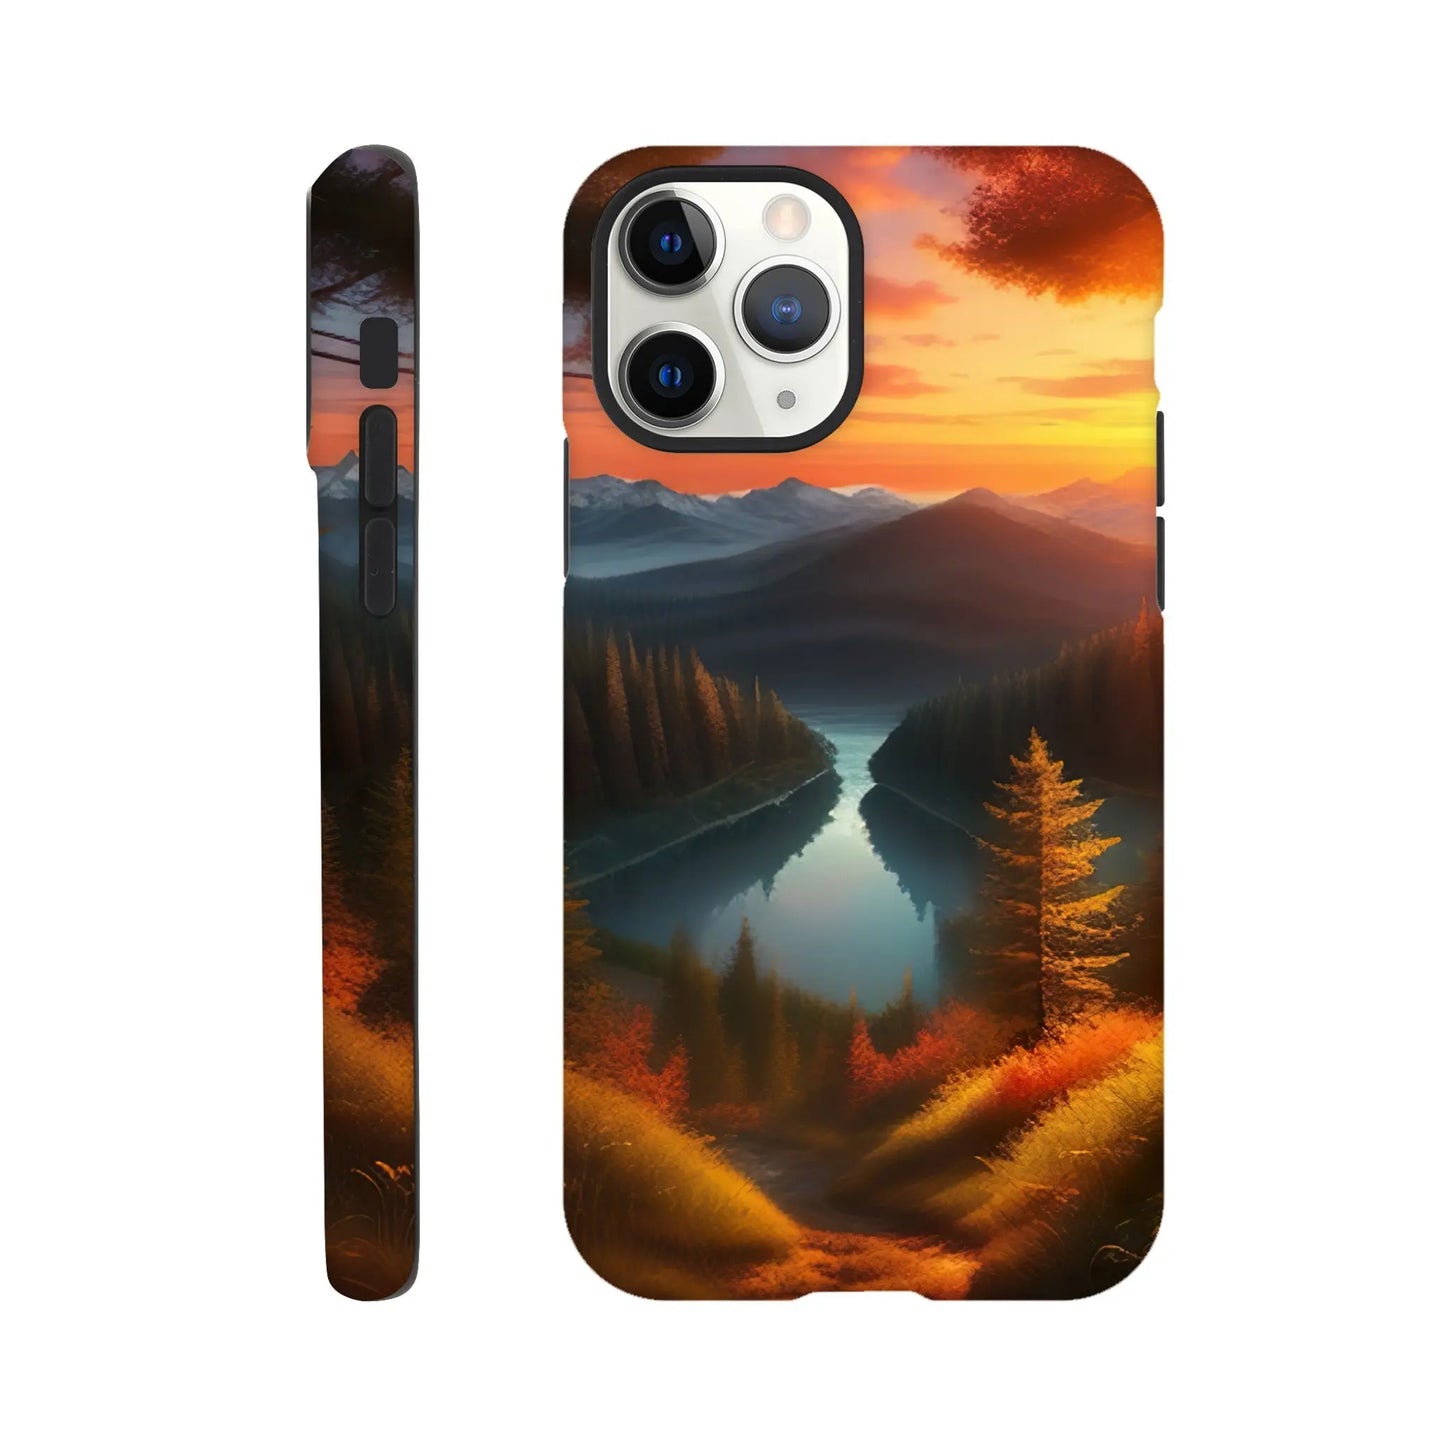 Smartphone-Hülle "Hart" - Bergpanorama - Digitaler Stil, KI-Kunst RolConArt, Landschaften, iPhone-11-Pro